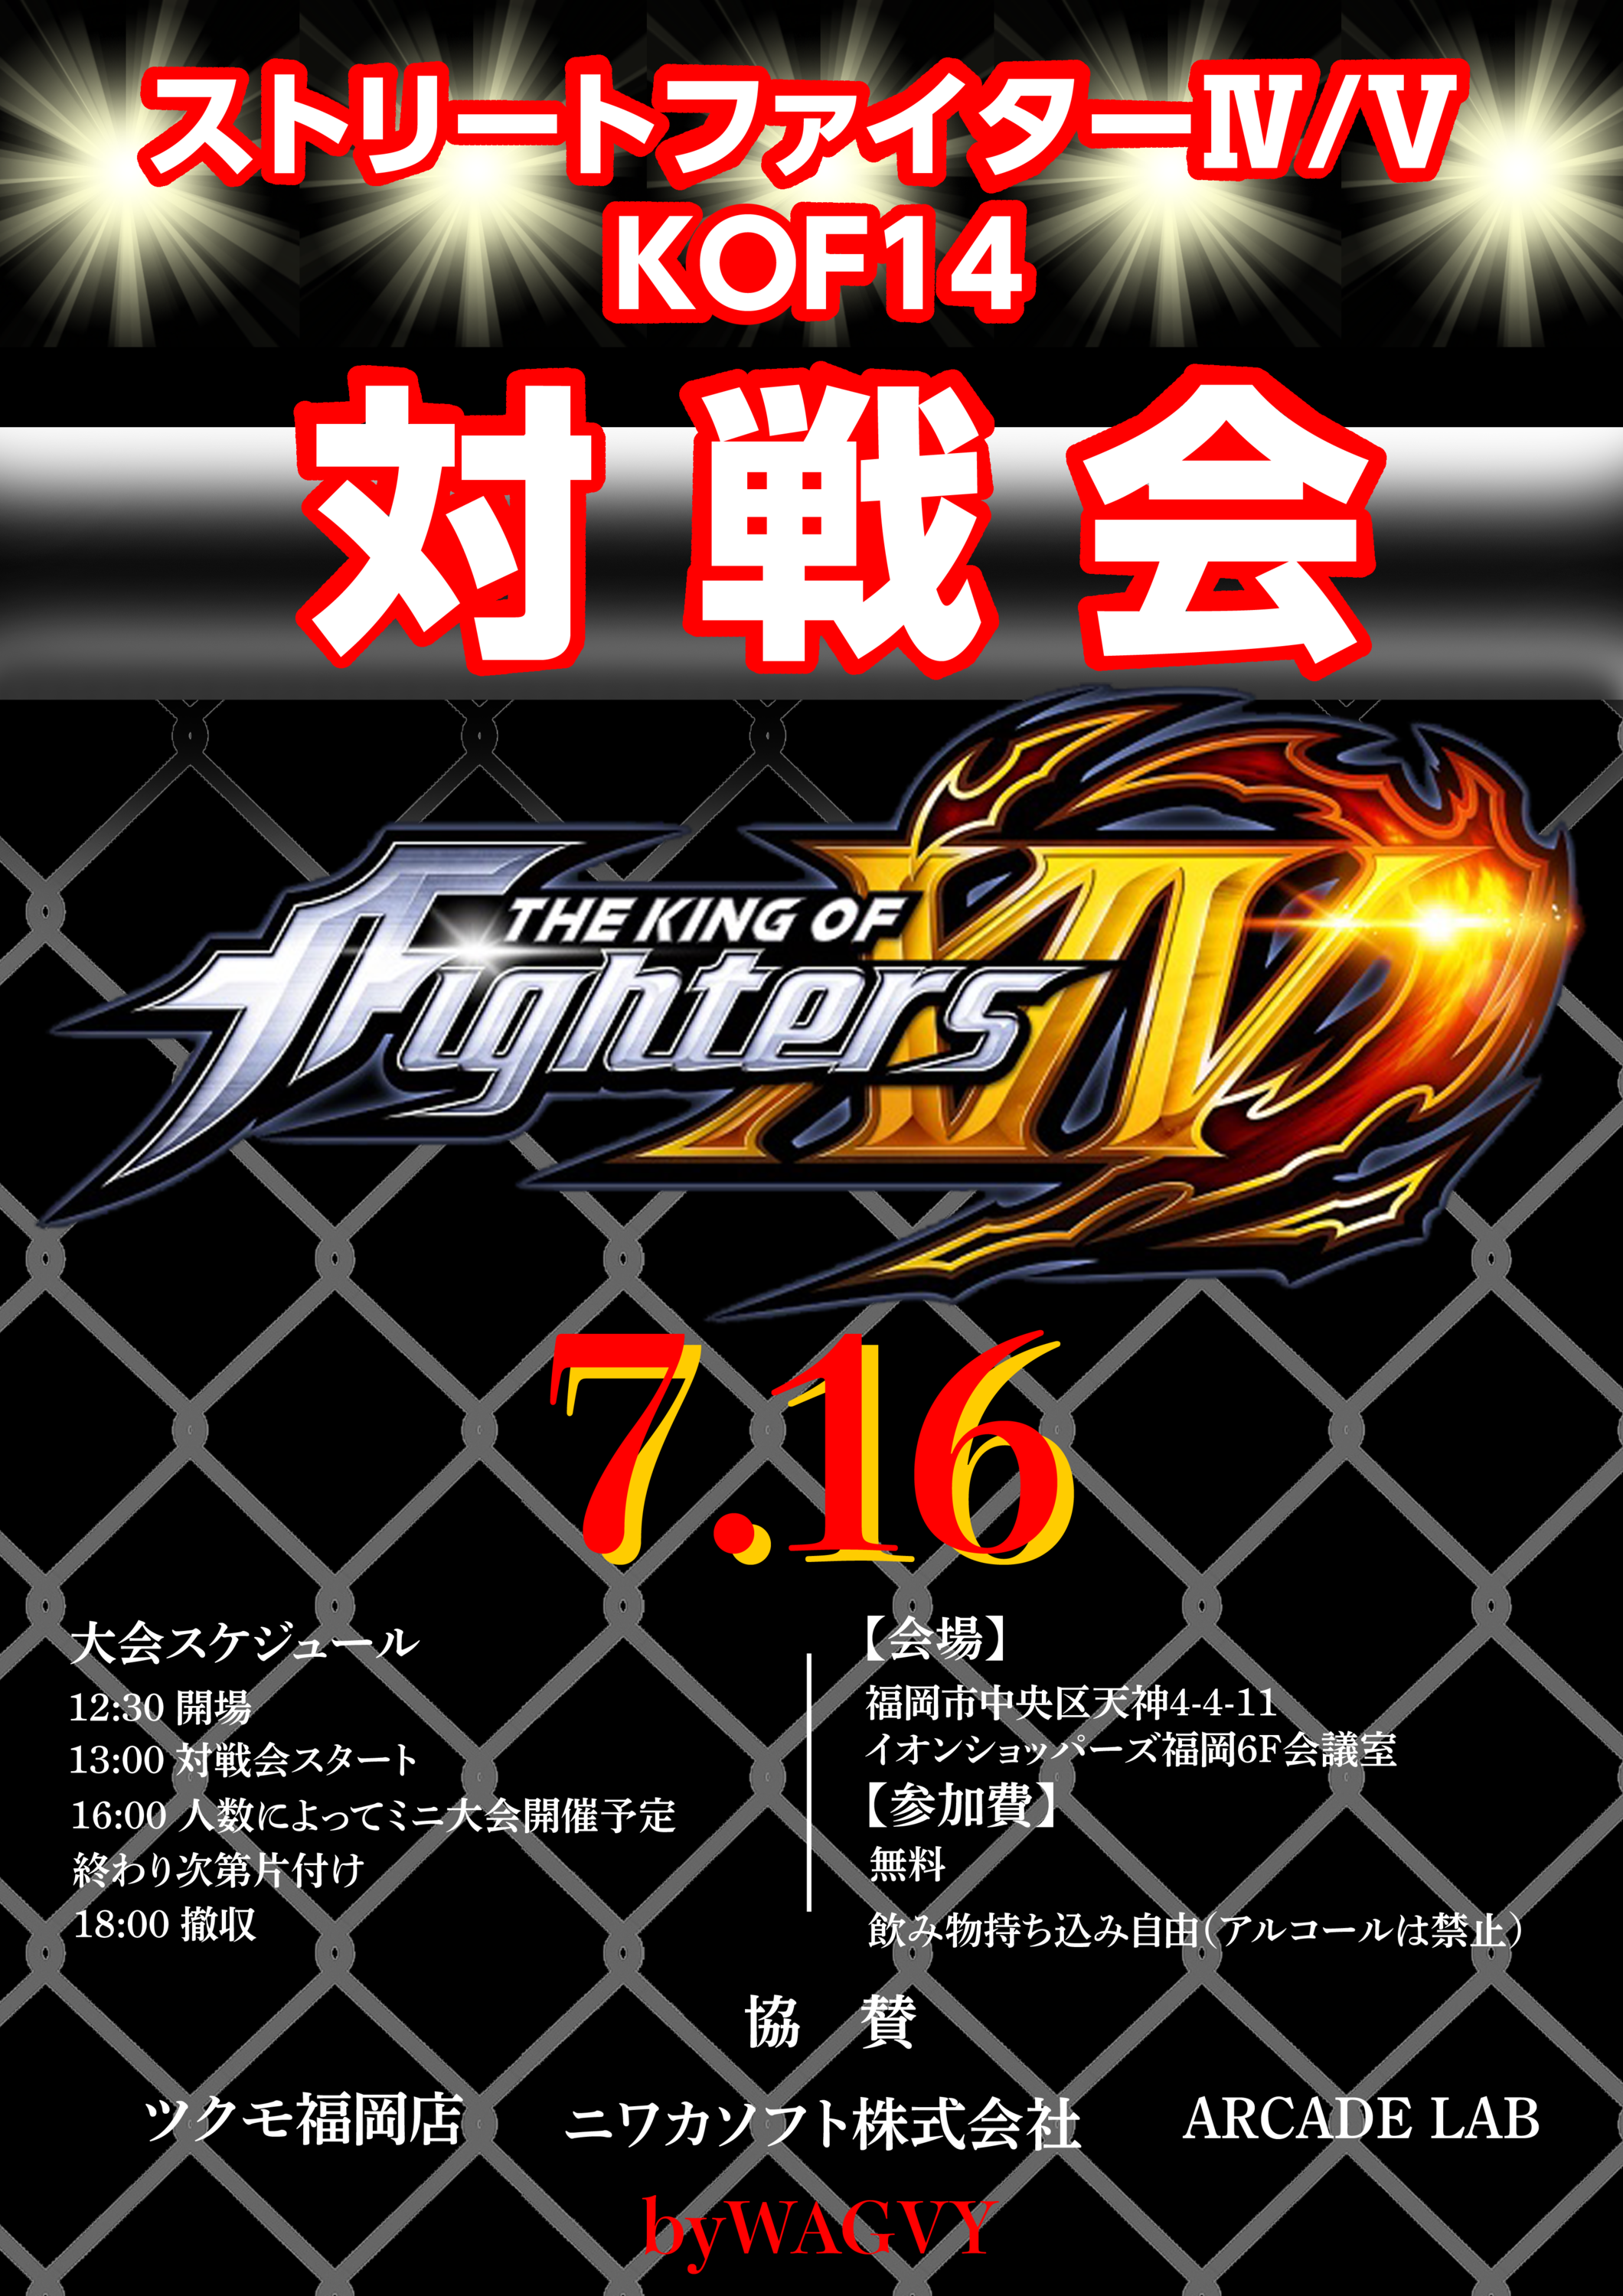 KOF14・STREET FIGHTER4and5 対戦会